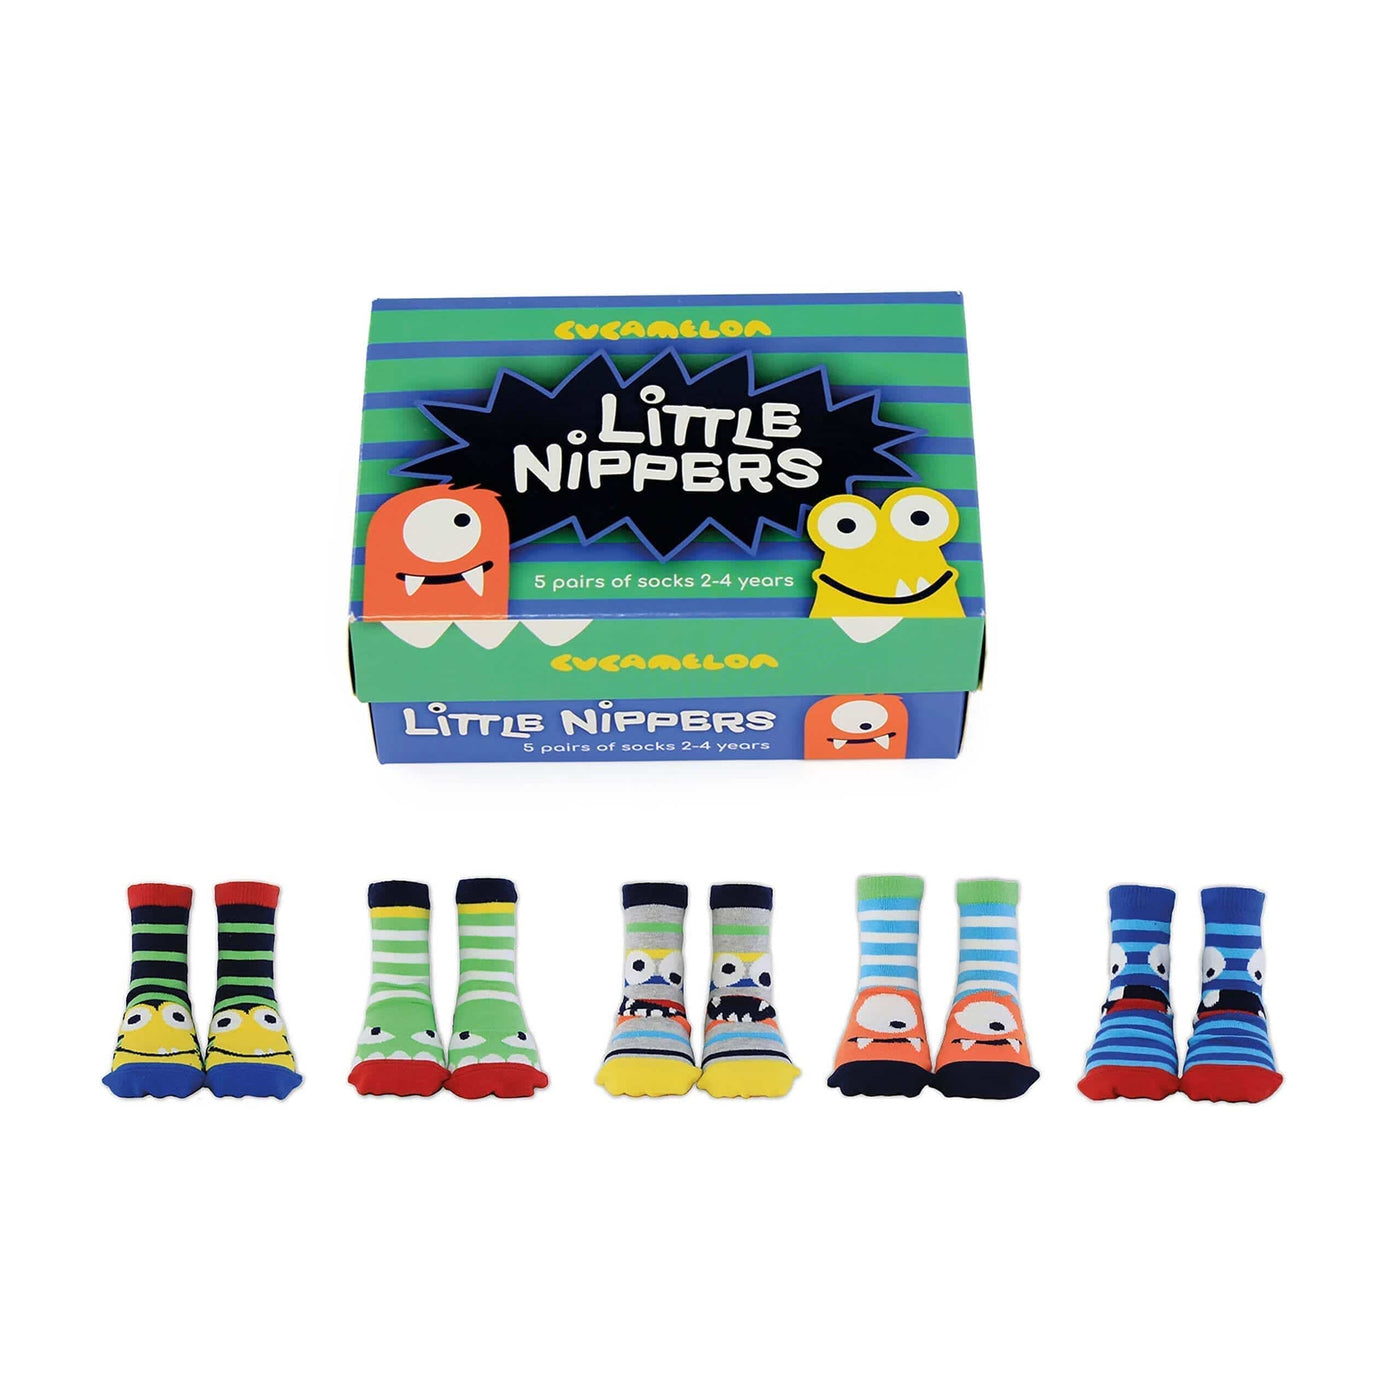 United Odd Socks Socks Cucamelon Little Nippers Children's Socks - 2-4 Years